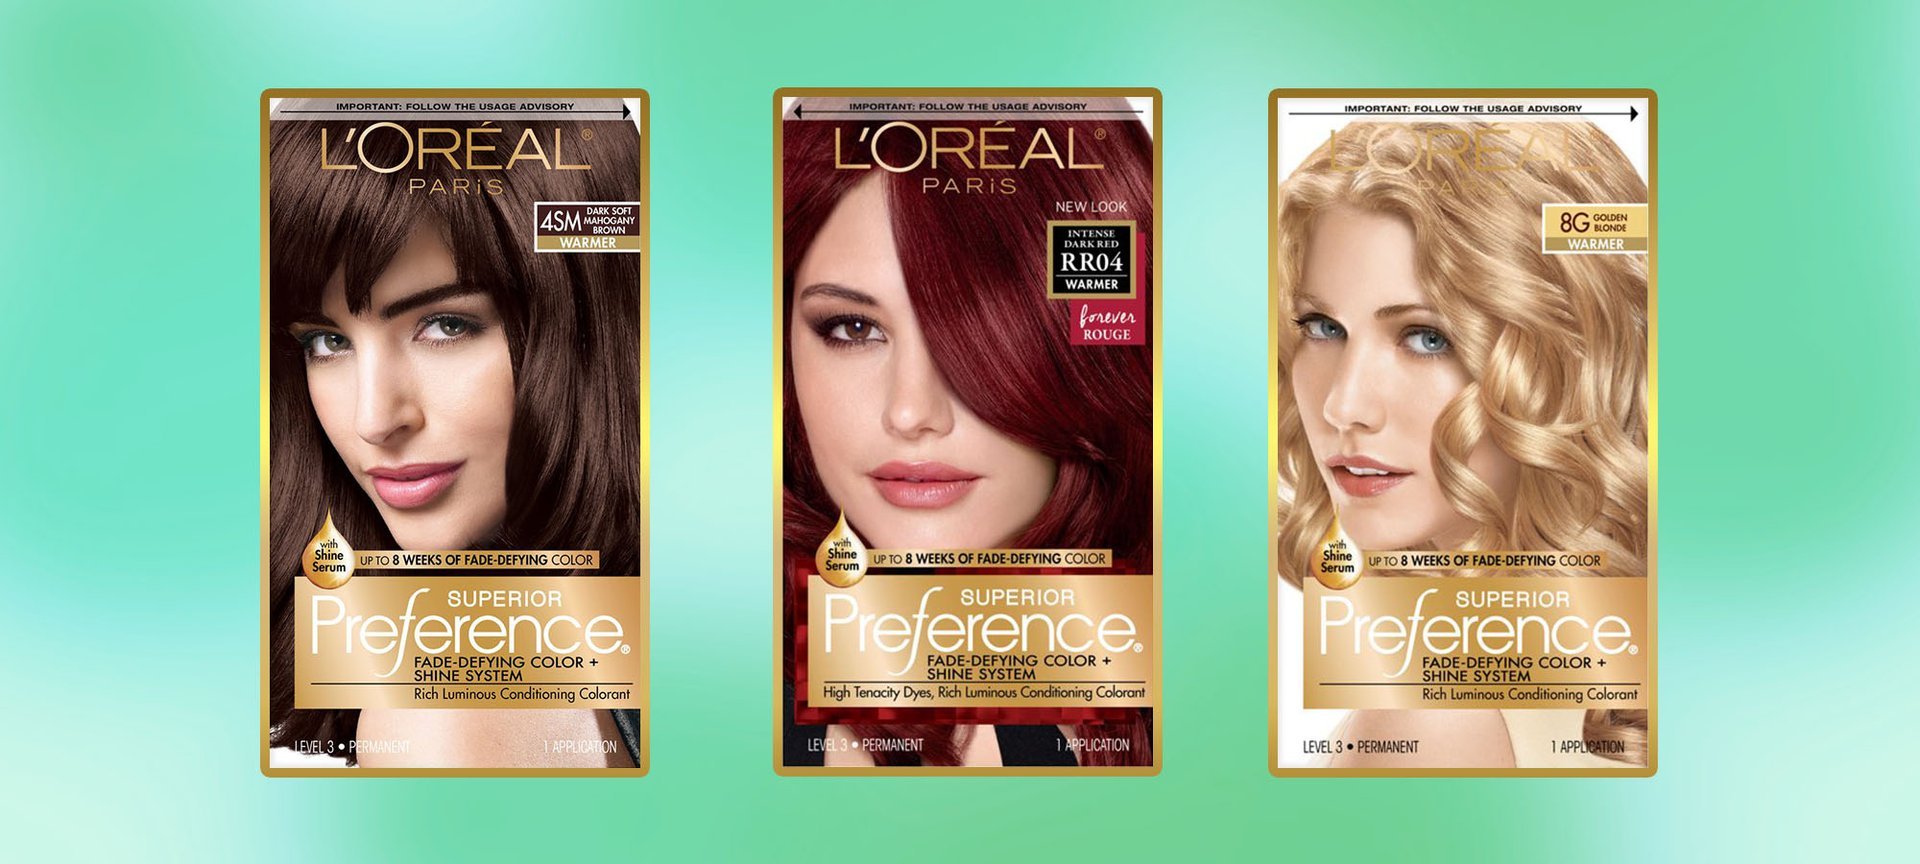 LOreal Paris Superior Preference Hair Color Chart CMS Bmag